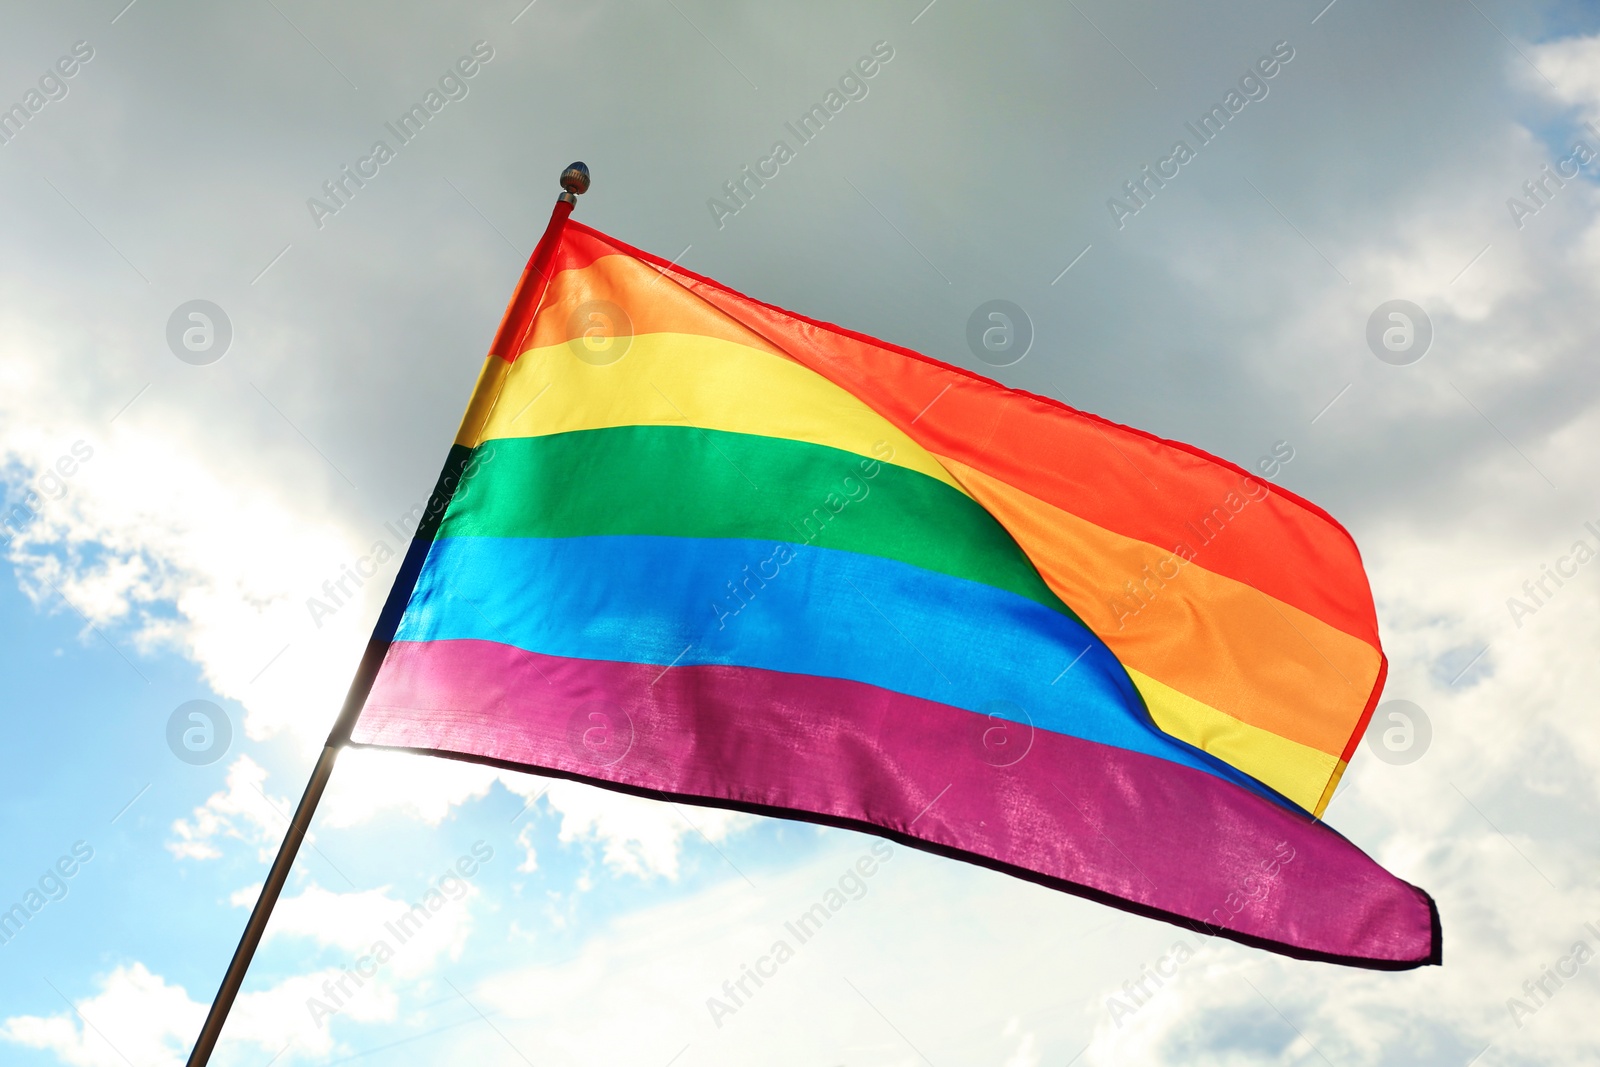 Photo of Bright rainbow gay flag fluttering against blue sky. LGBT community